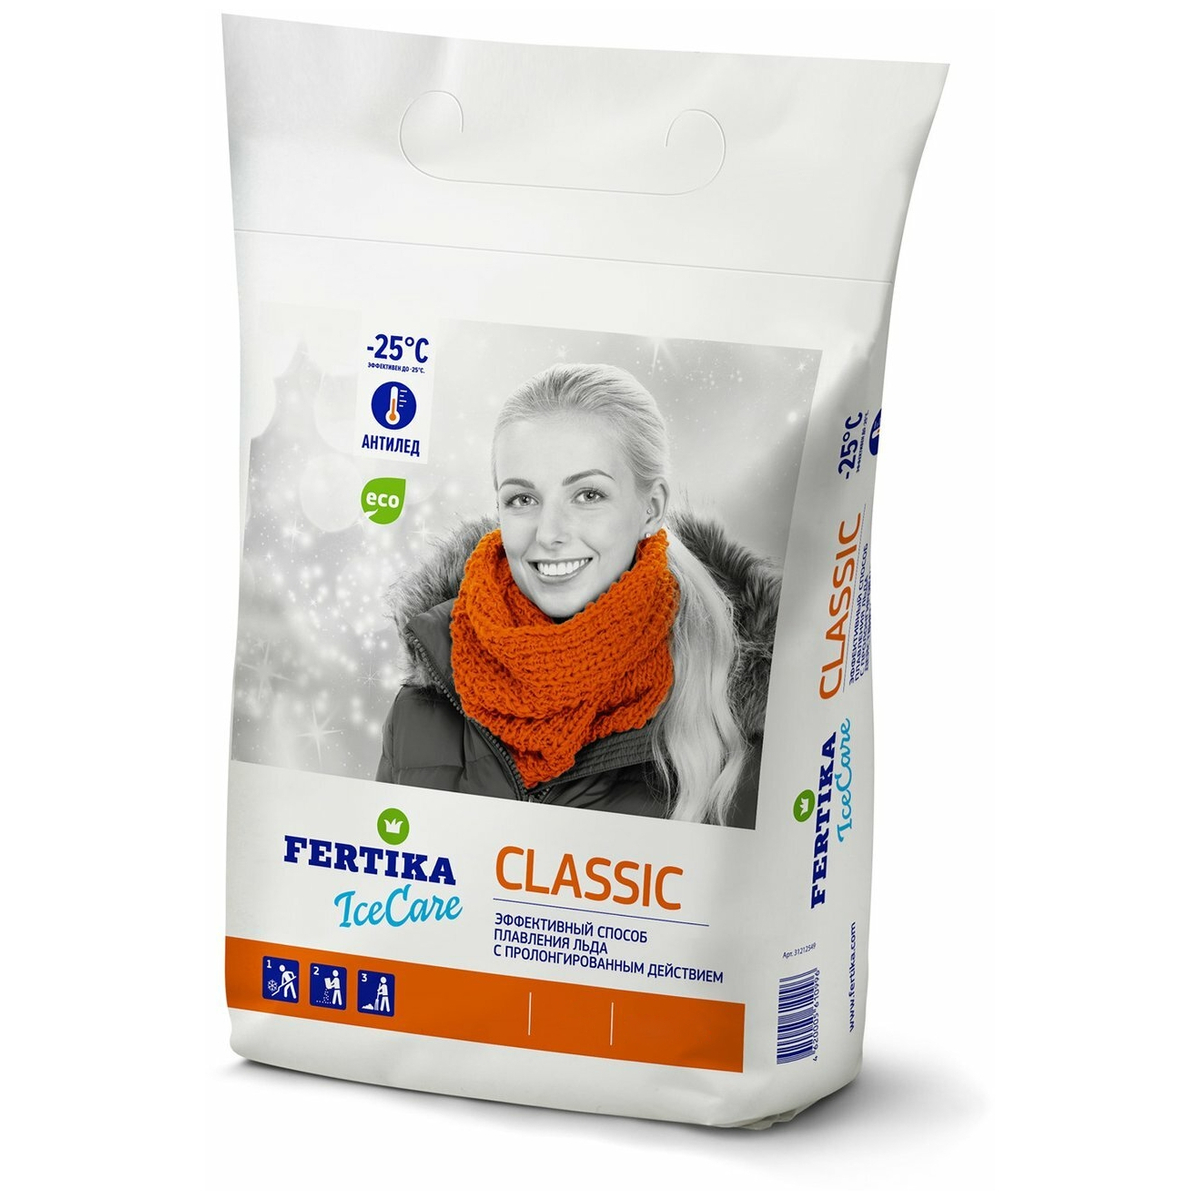 Реагент Фертика IceCare Classic для температуры -25°С, 5 кг